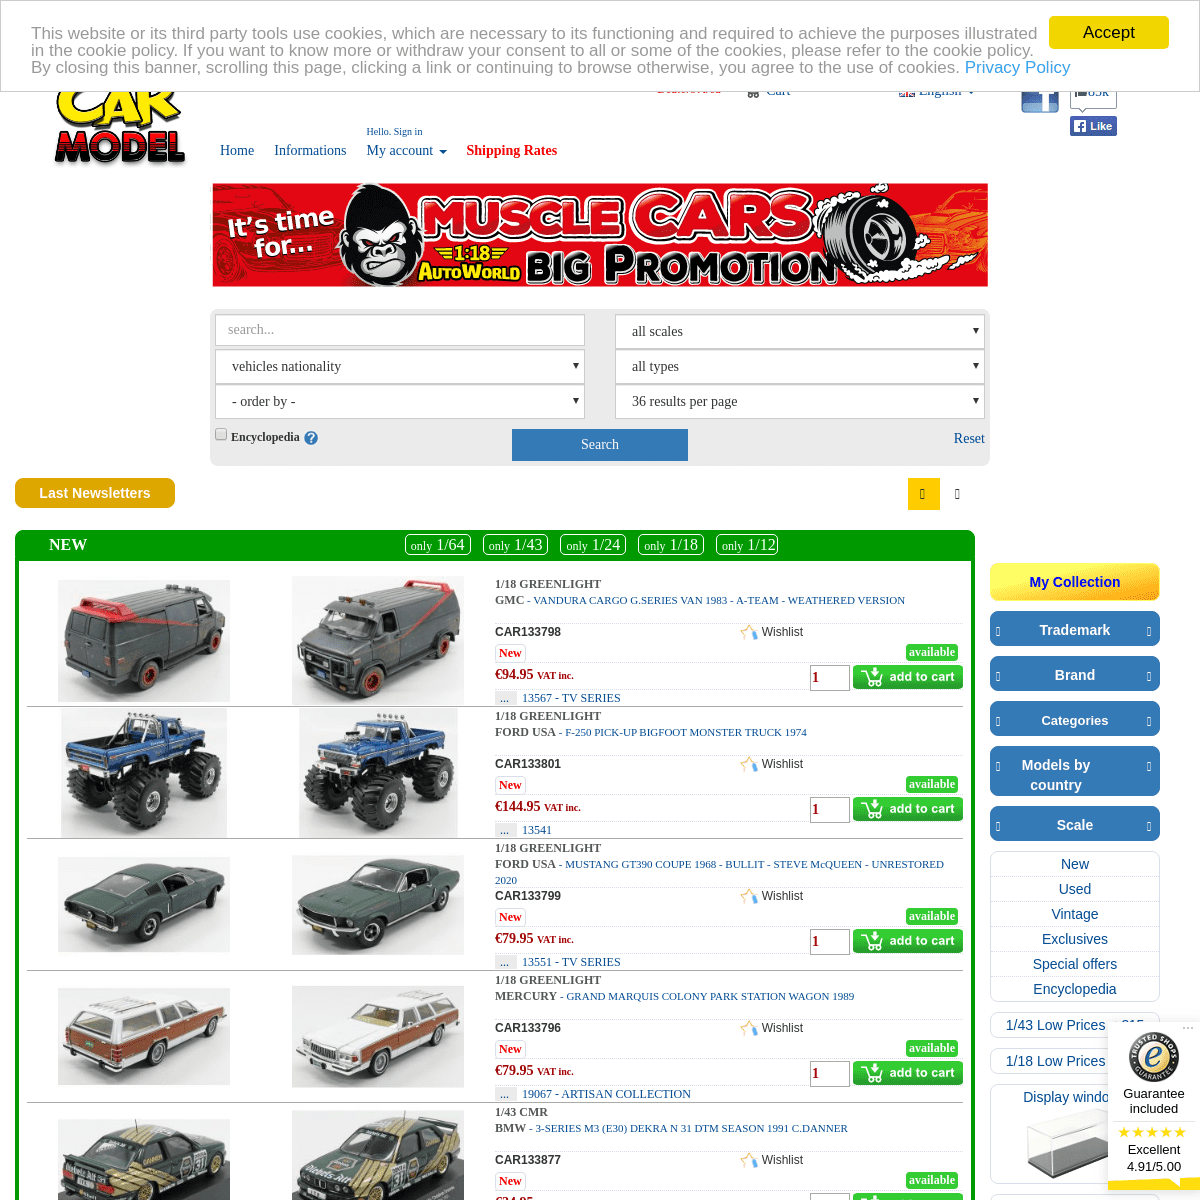 A complete backup of carmodel.com